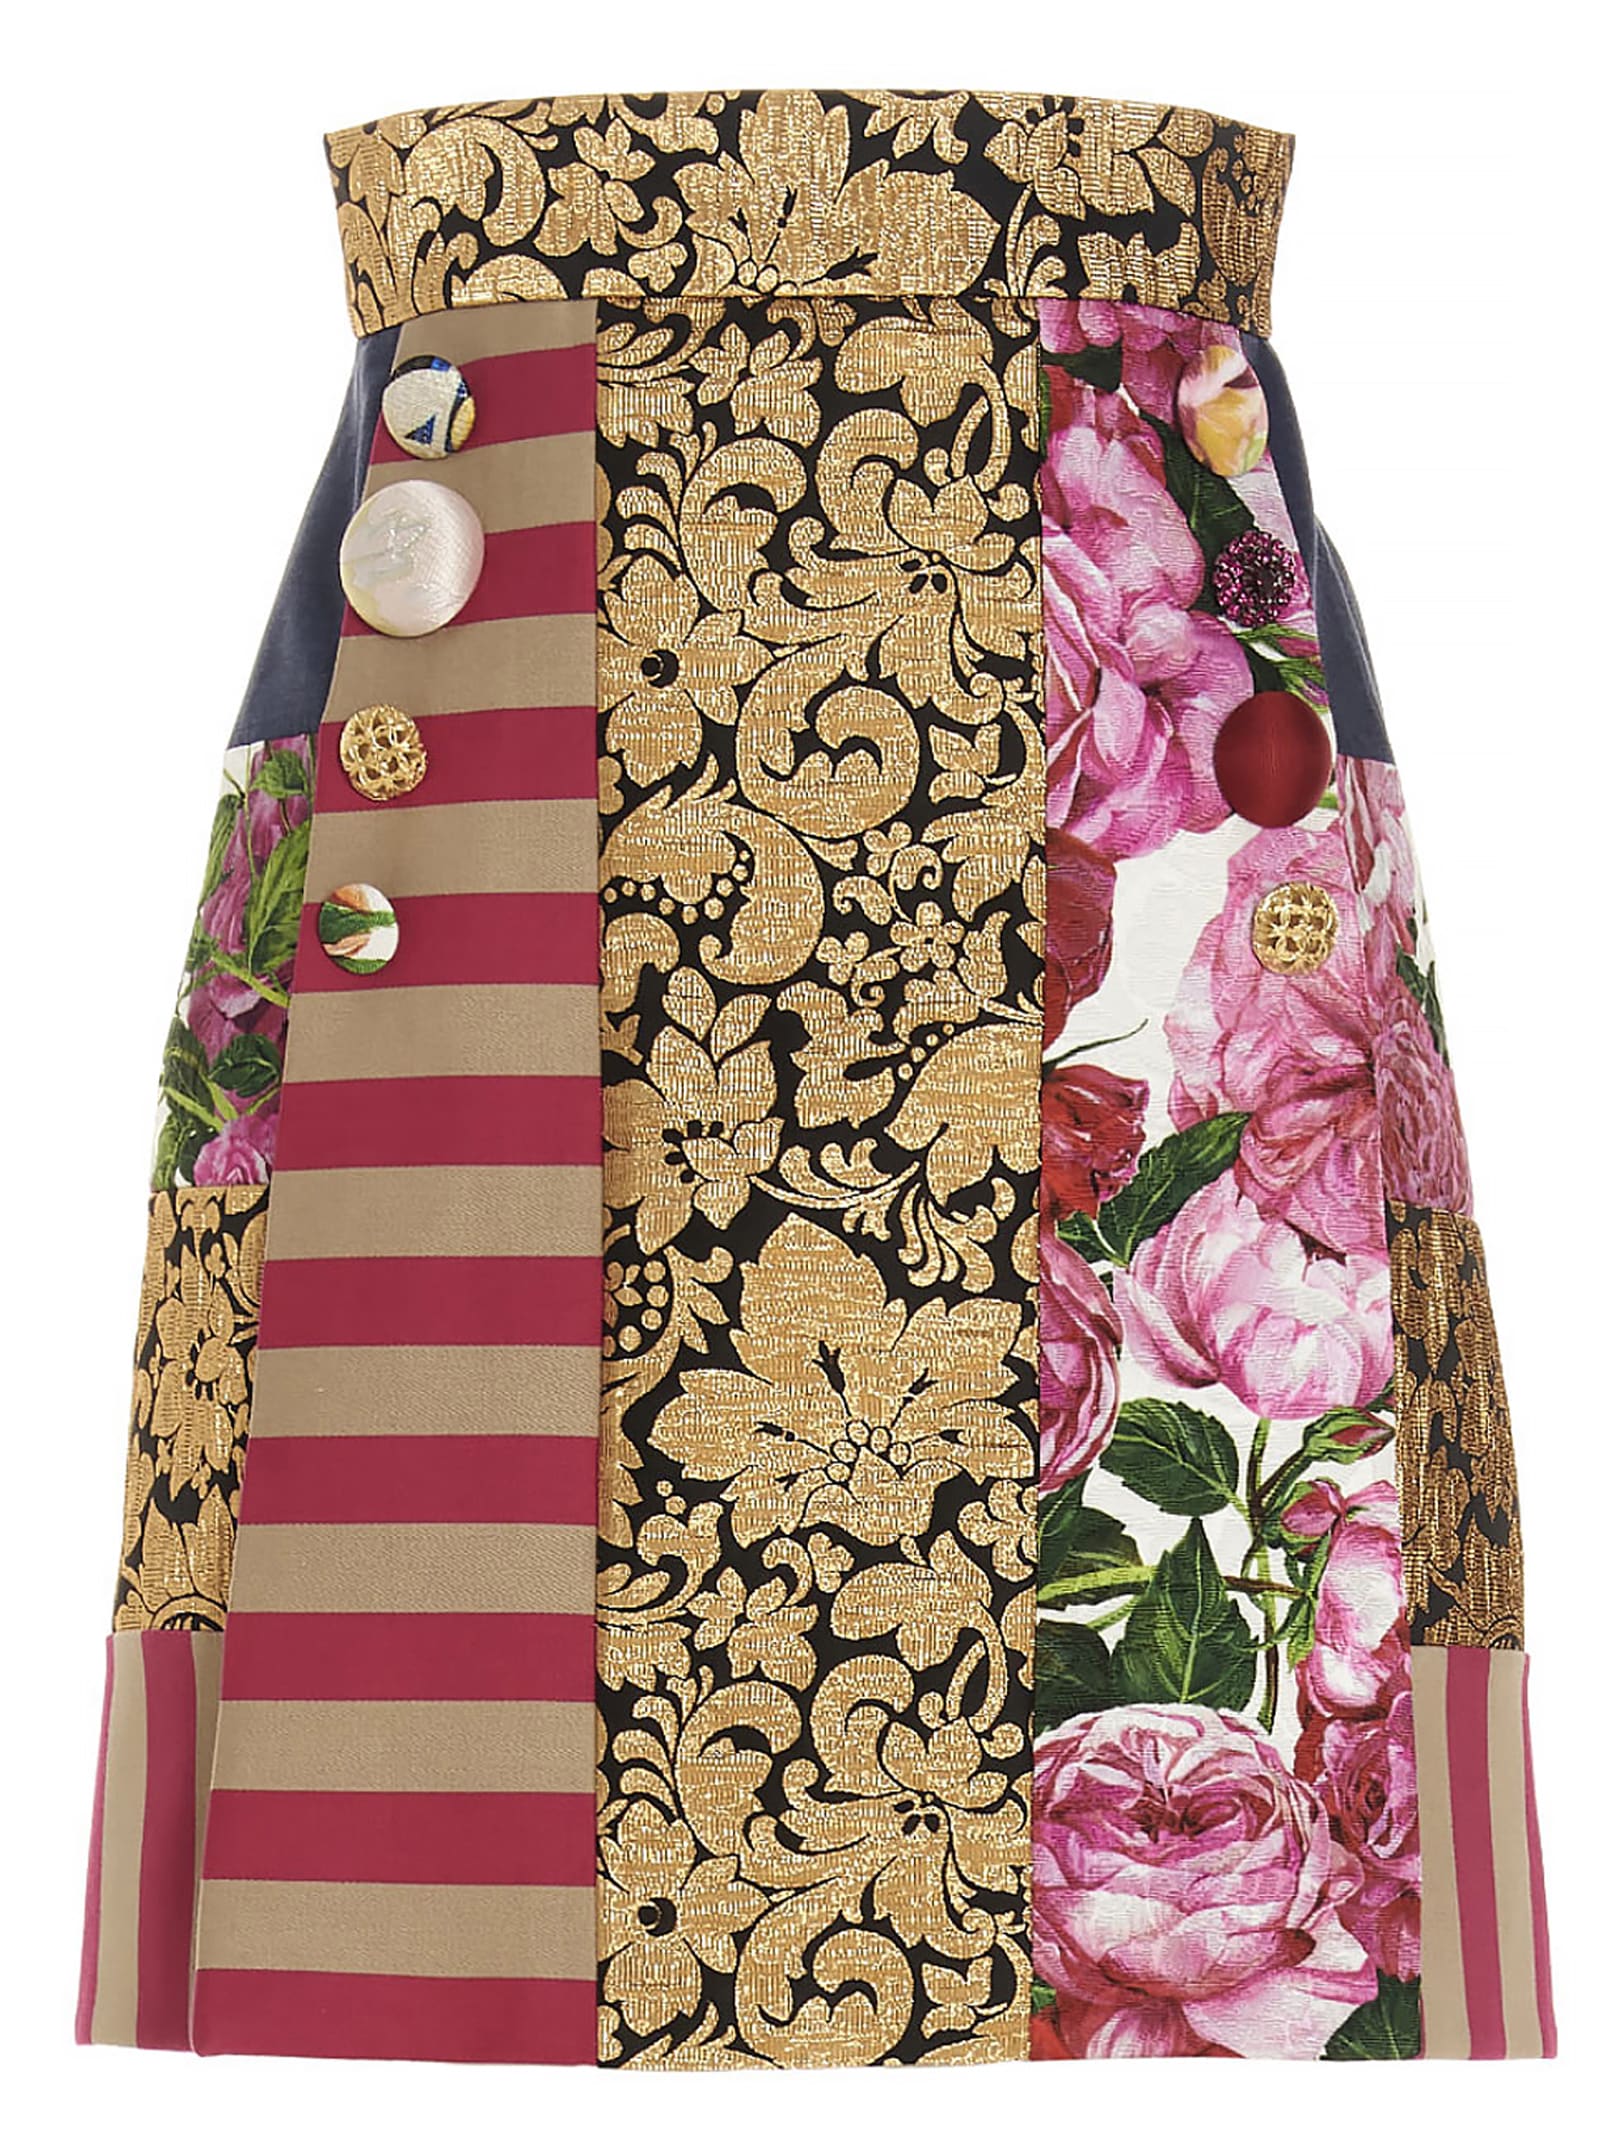 Dolce & Gabbana Skirt In Multicolor